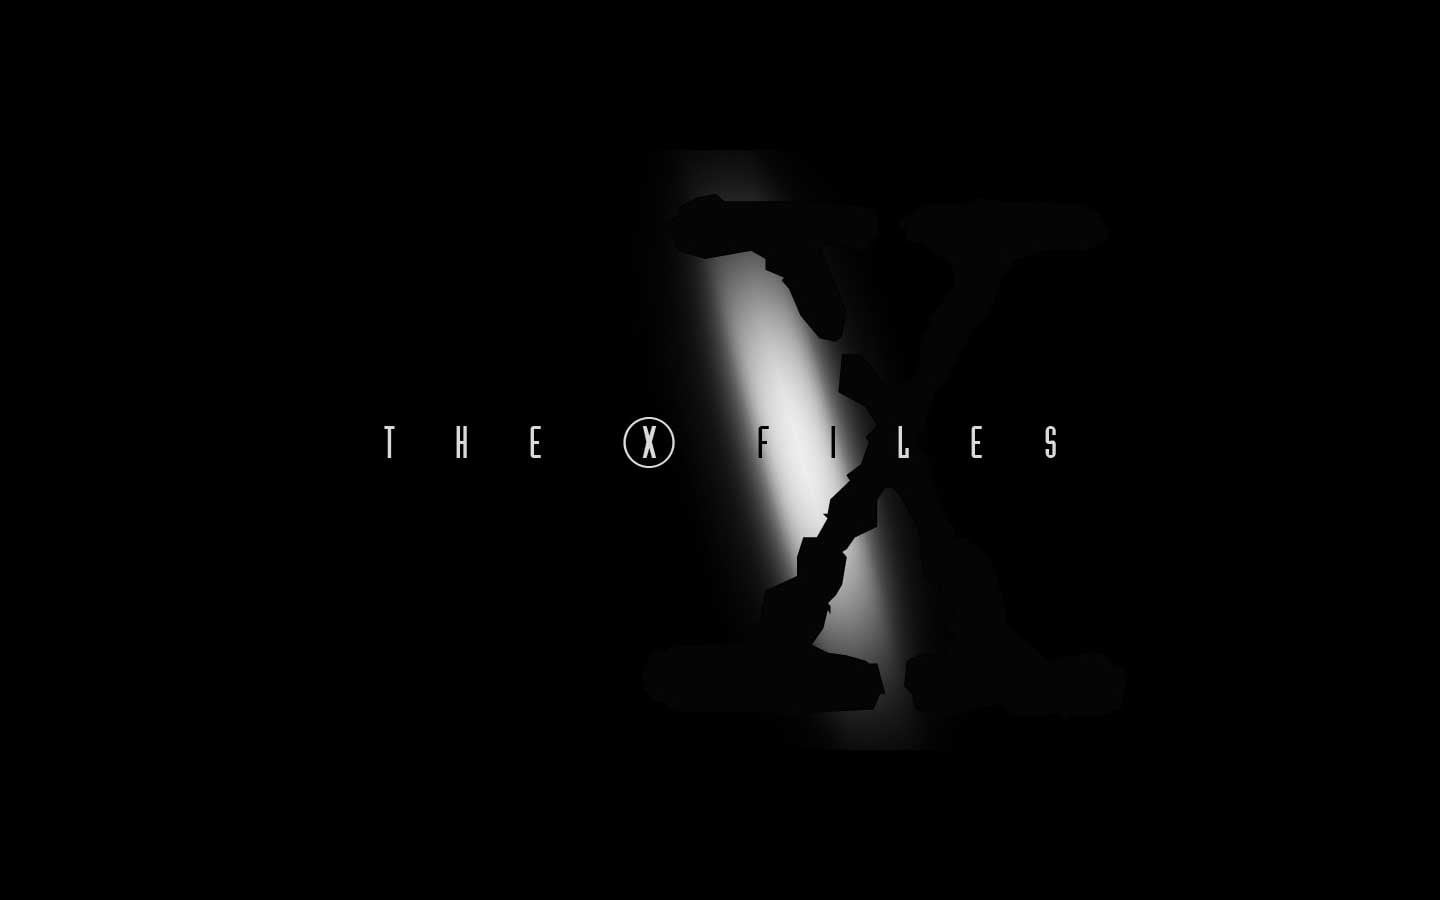 The X Files wallpaper, The X-Files, logo, black, TV, indoors